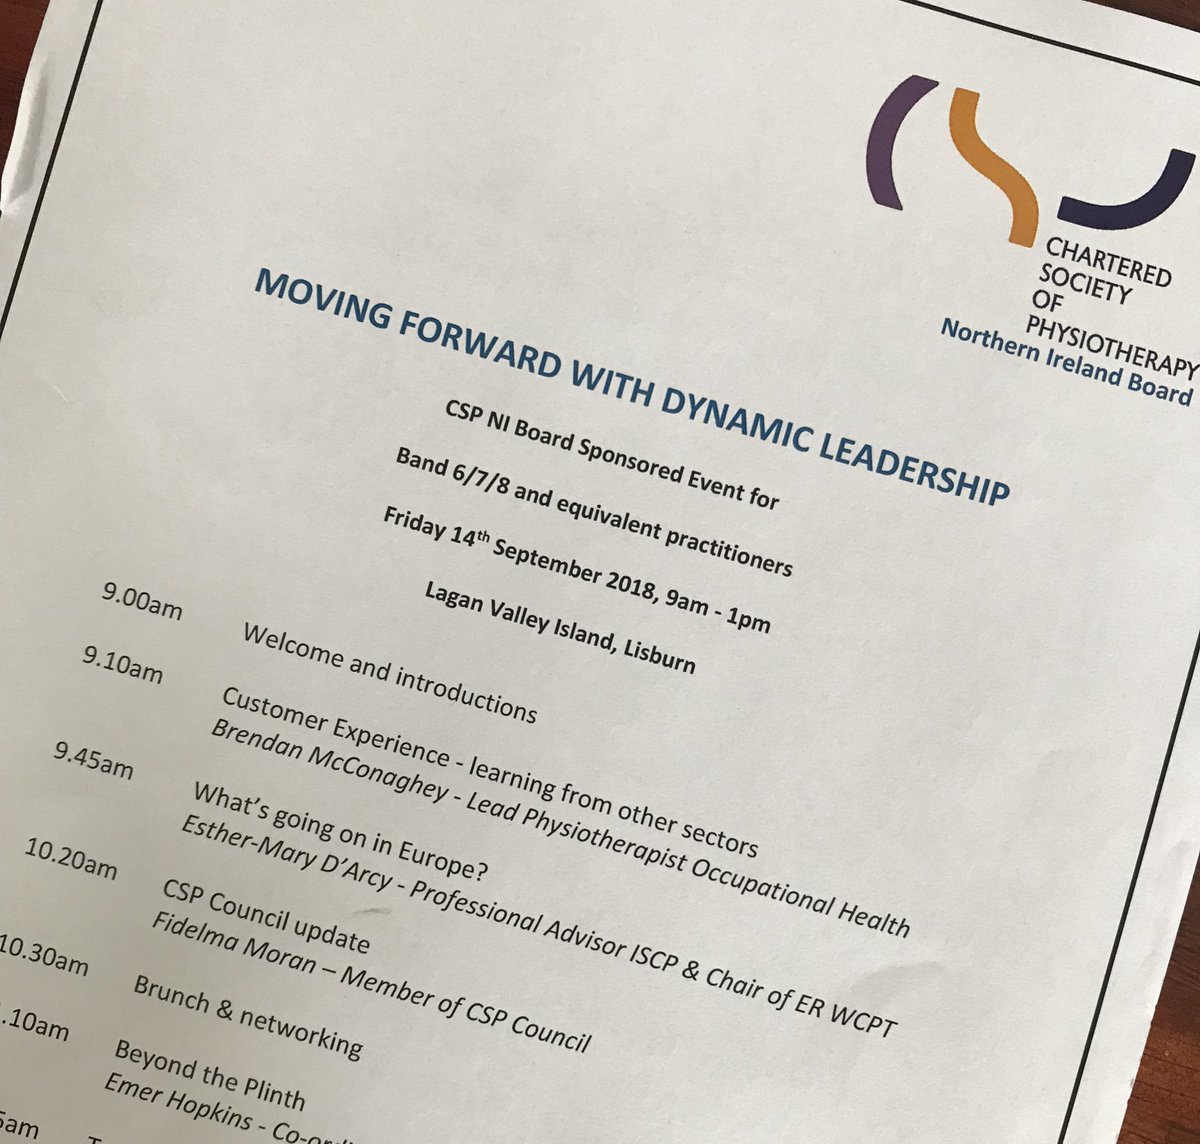 Great morning @IrelandCsp Dynamic Leadership workshop with an experienced lineup of speakers @brendanmccon @gemda @fmoran15 @EmerHopkins #csp #physios #leadership